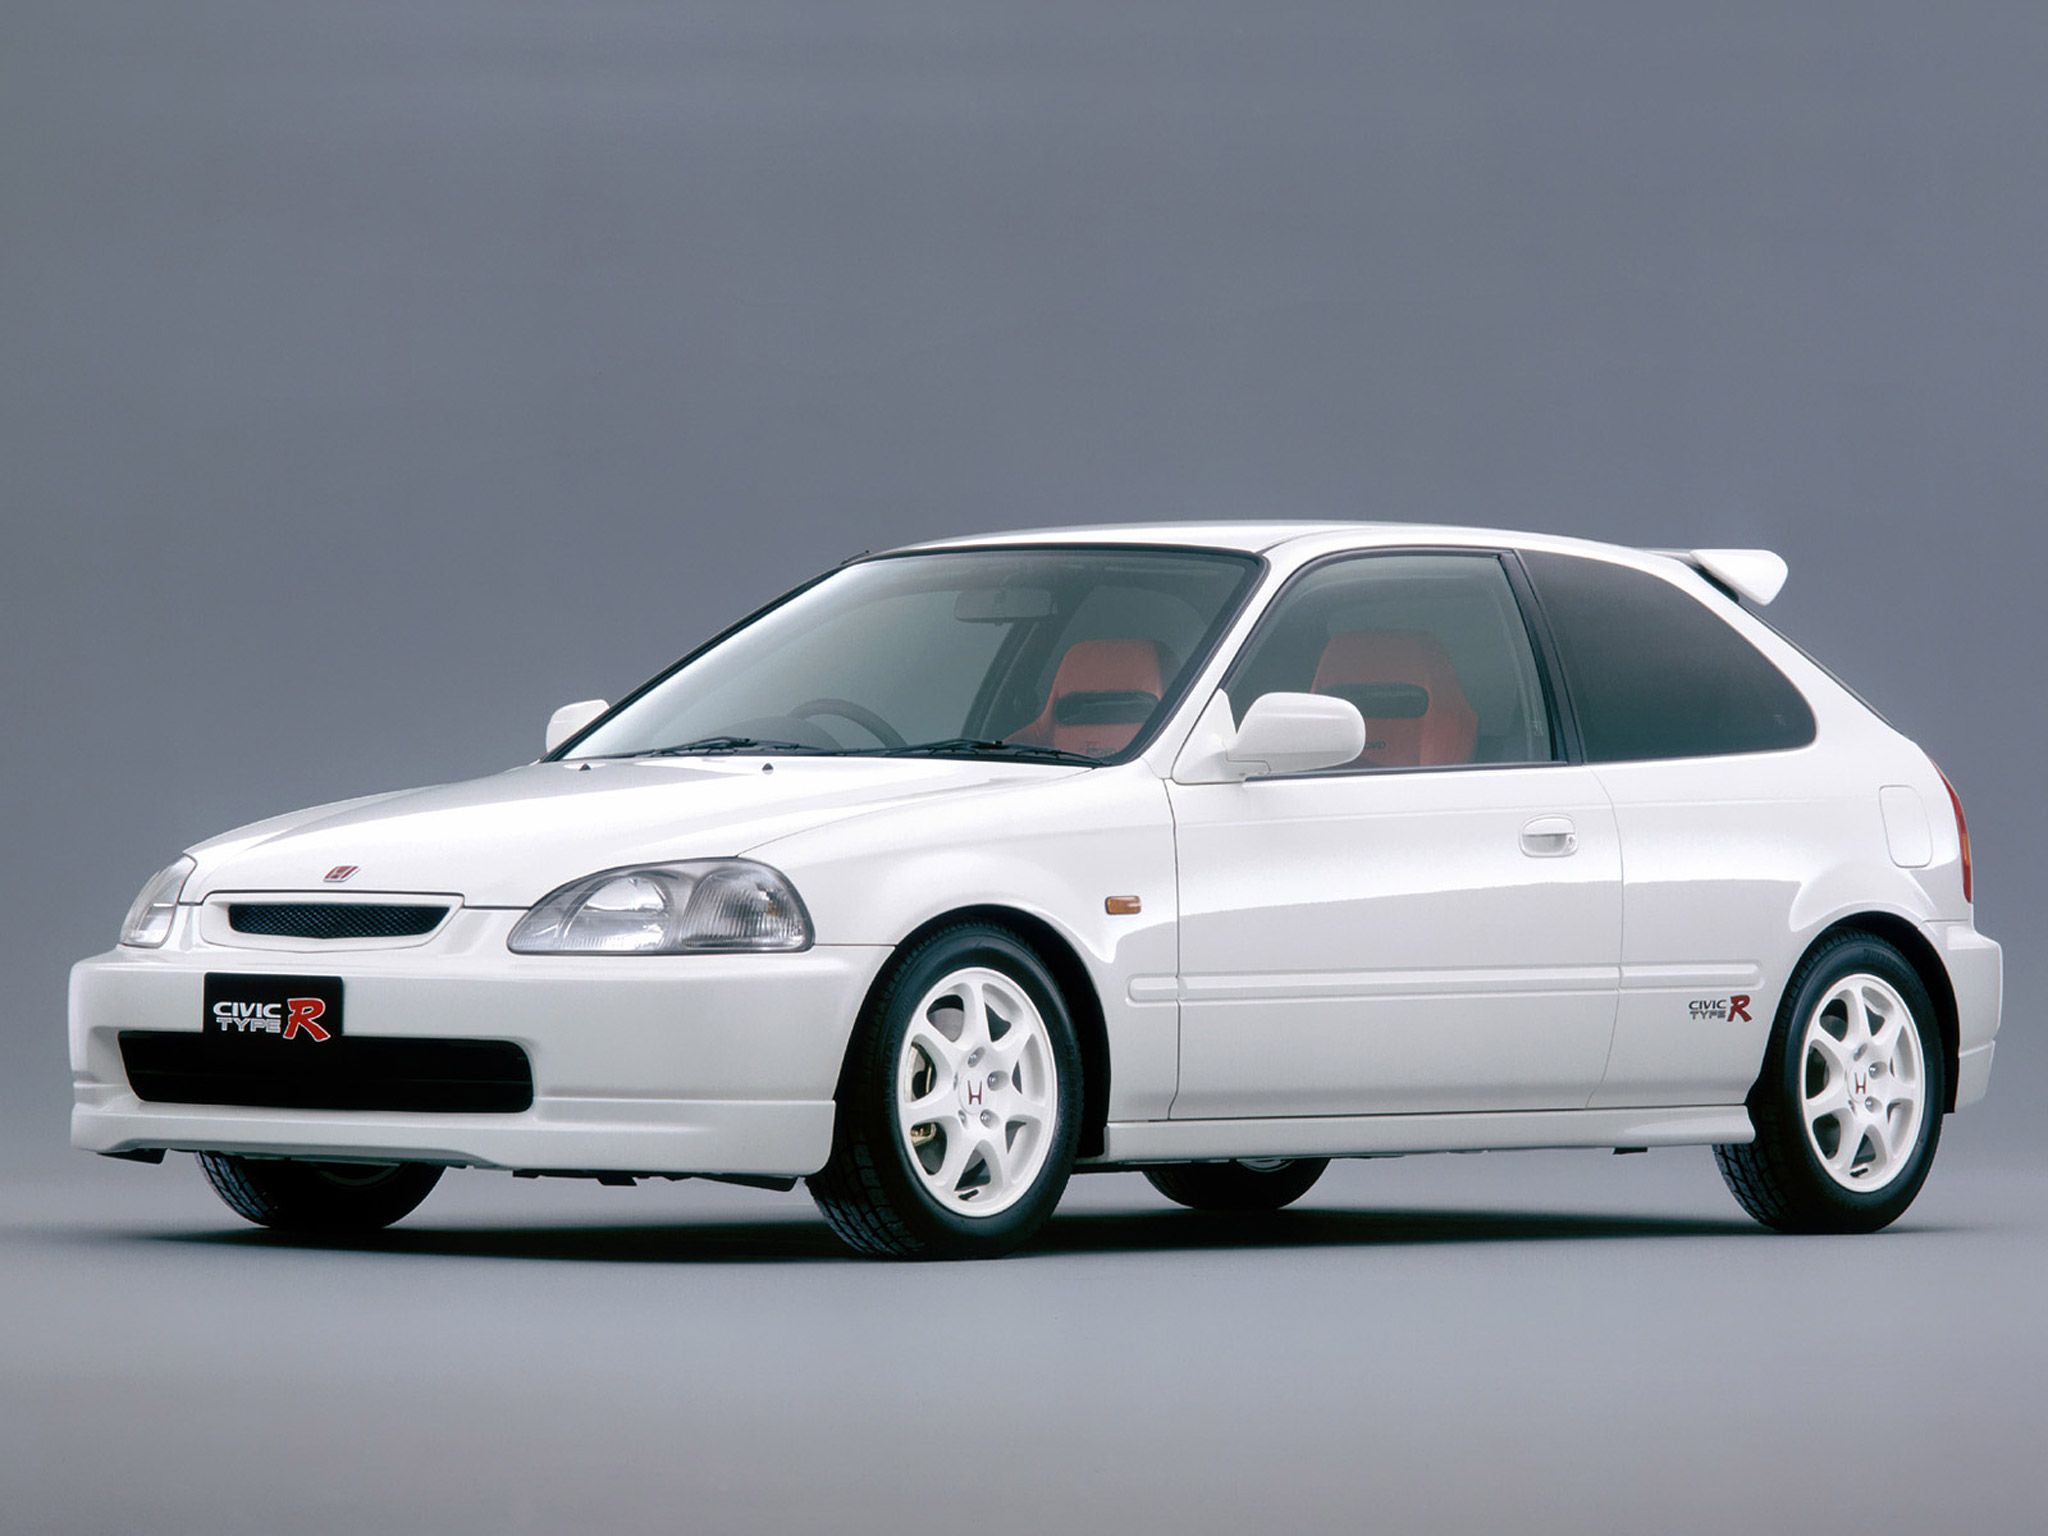 1997-Honda-Civic-Type-R-001-1536